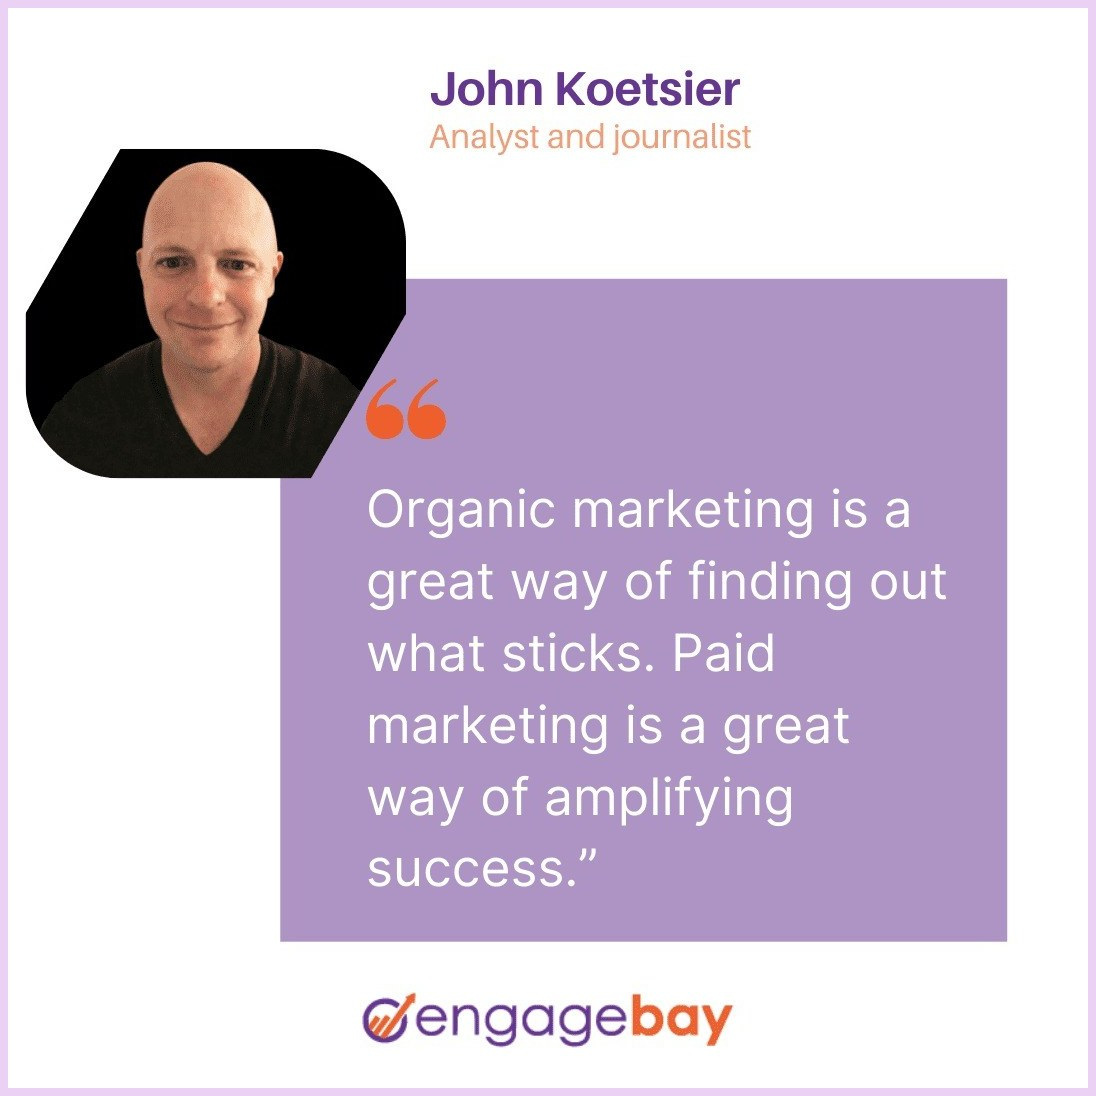 content marketing quote by John Koetsier